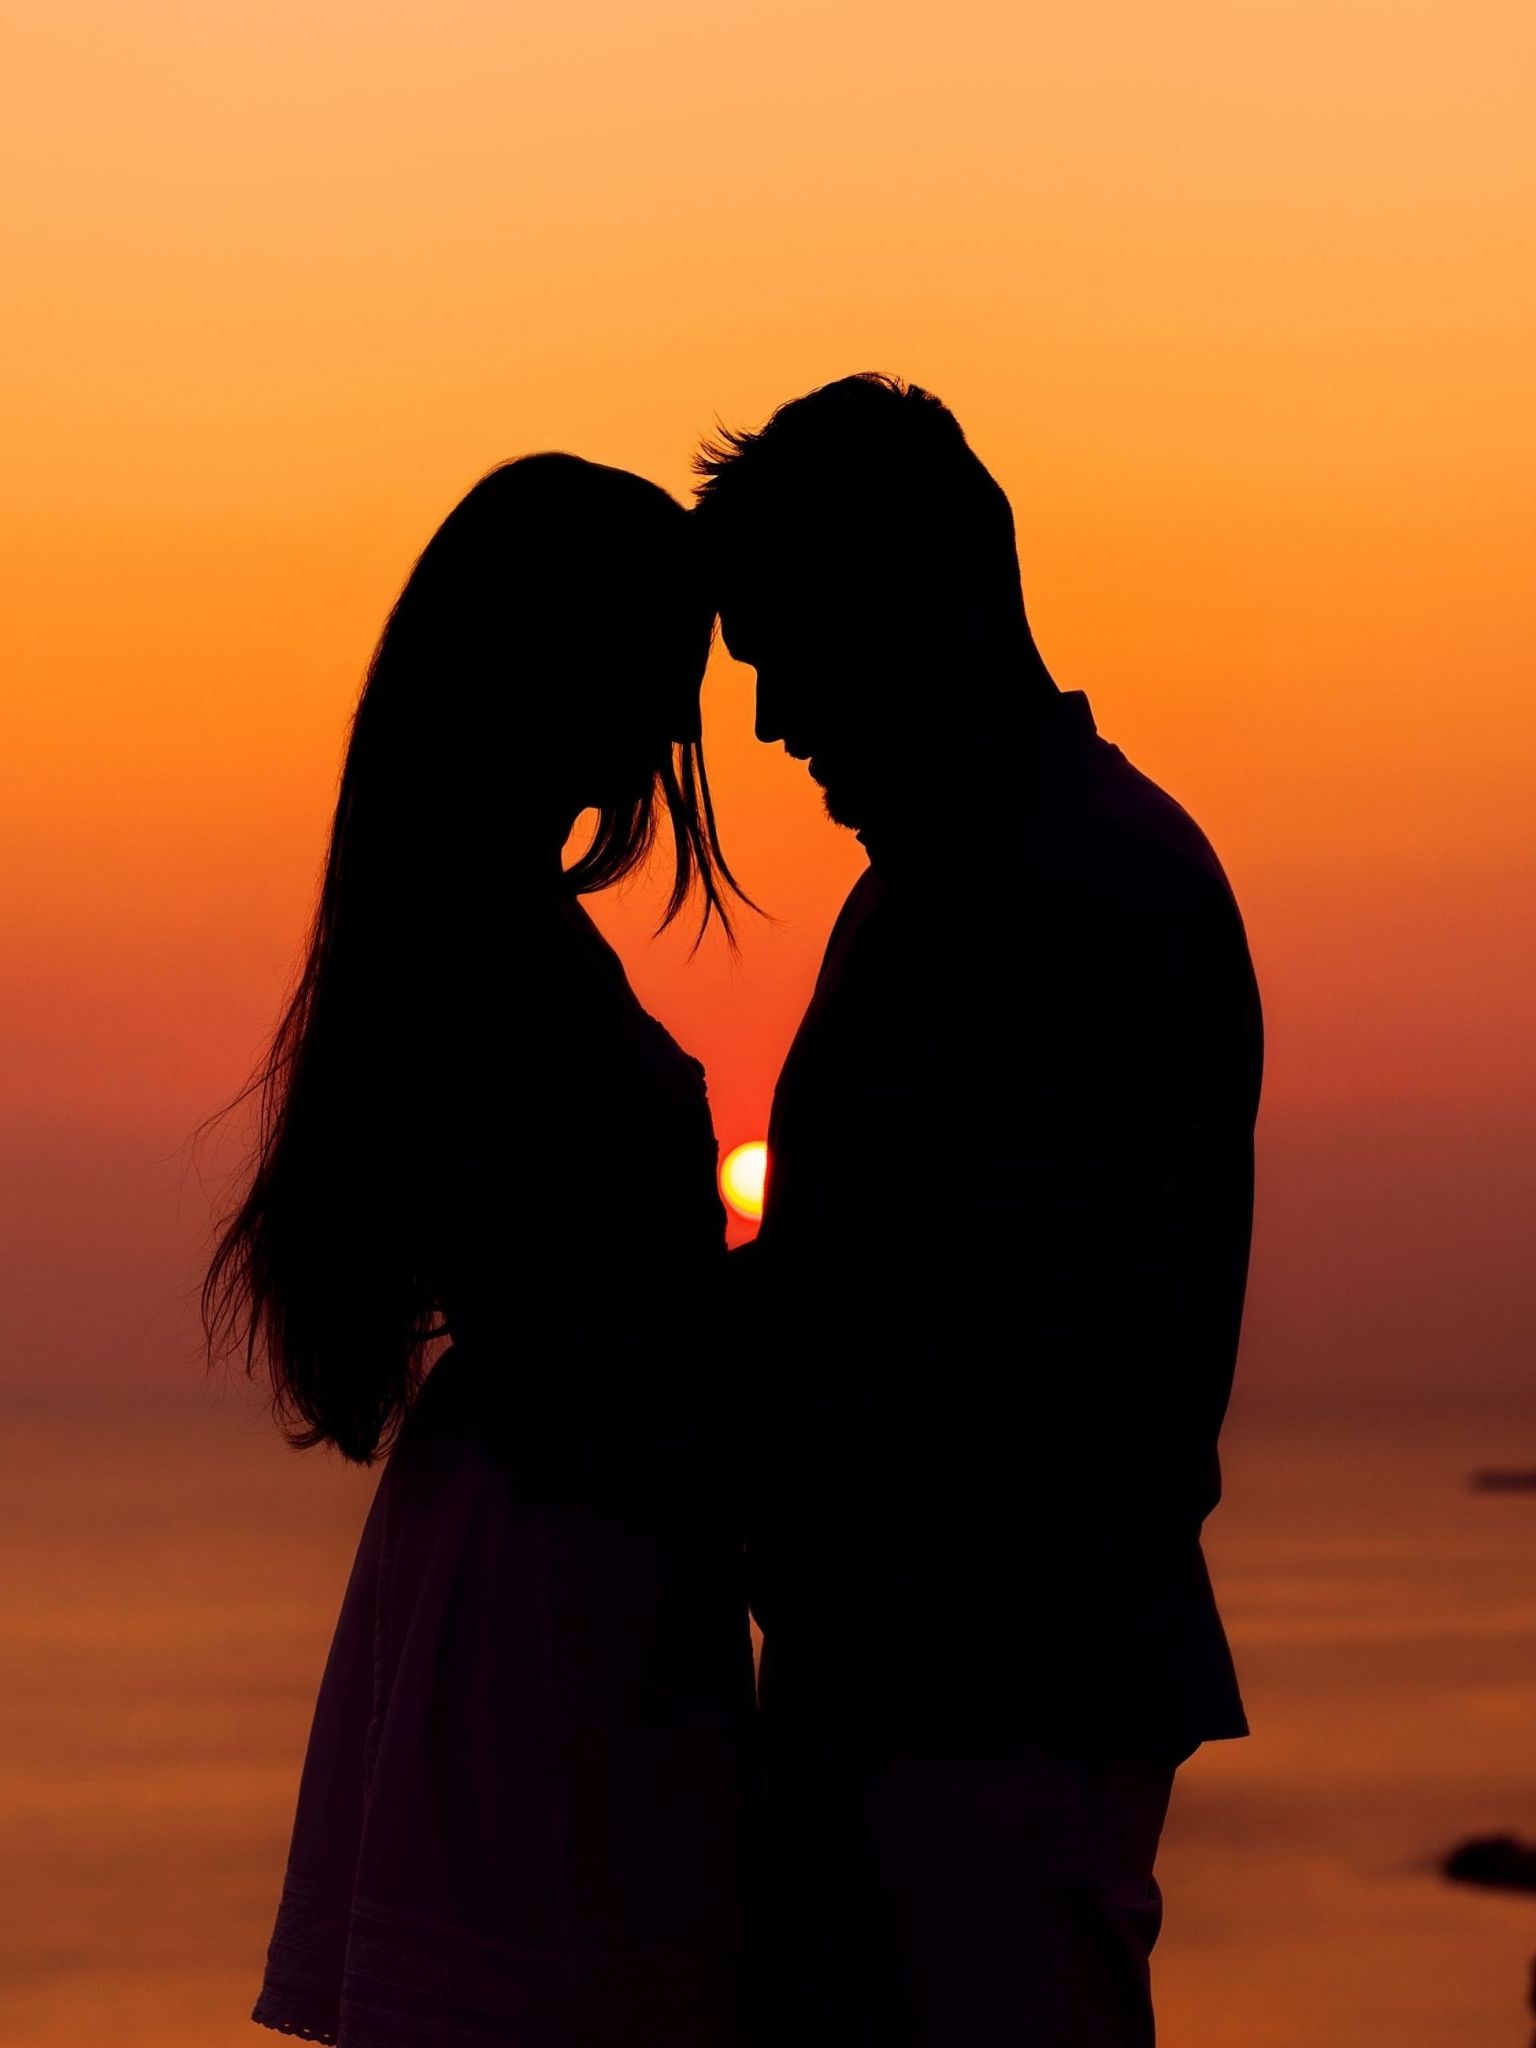 Free download girl woman boy man silhouette love feelings romance